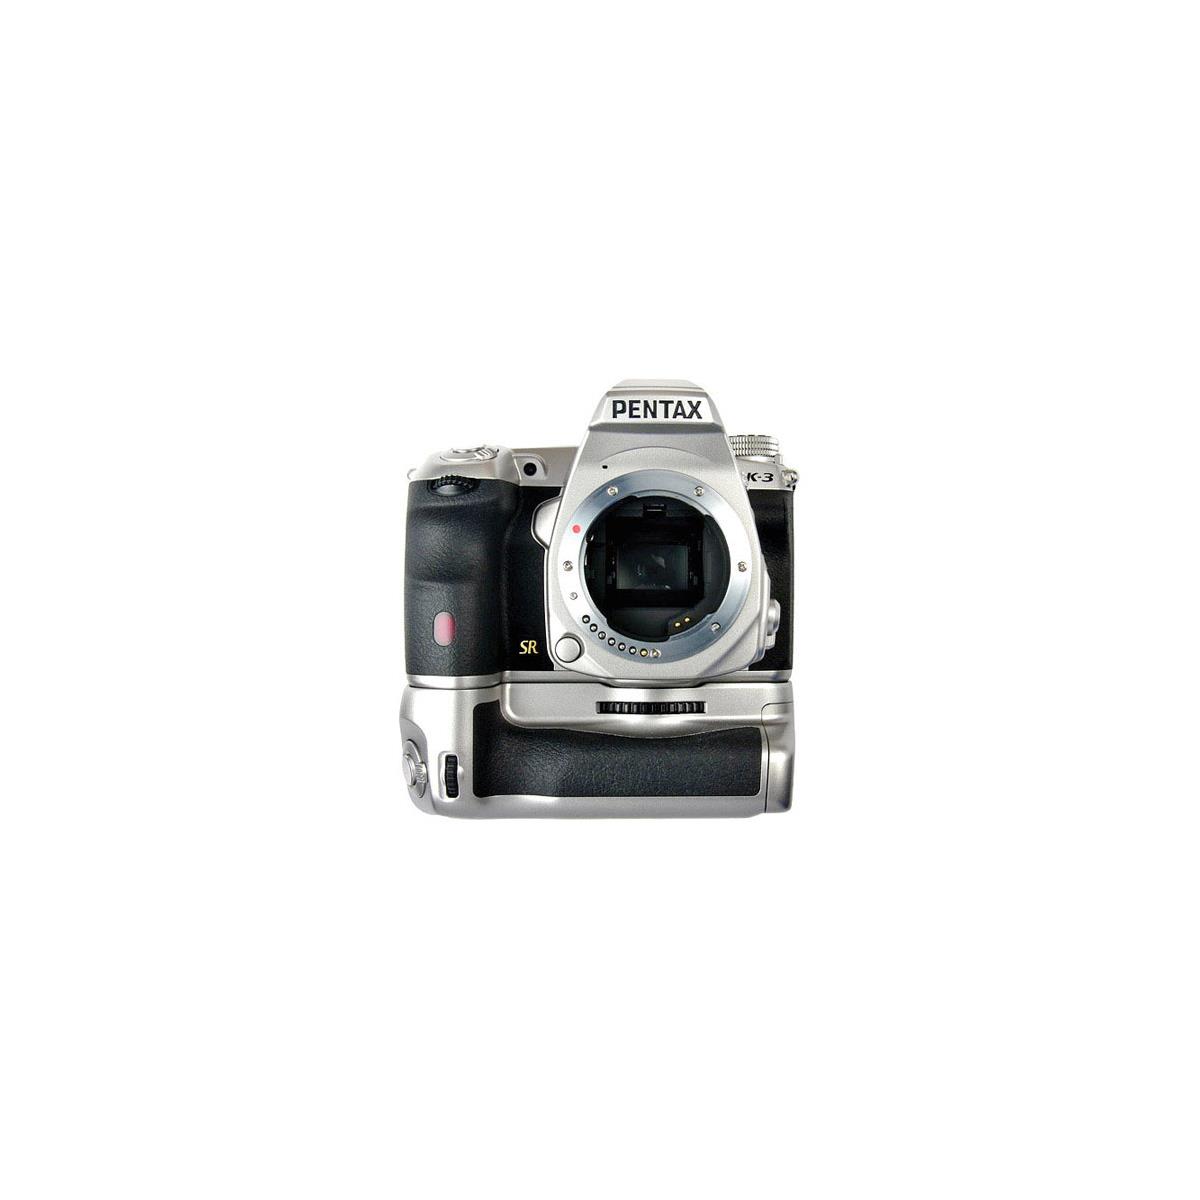 Pentax K-3 Digital SLR Camera Body Premium Silver Edition -  15563